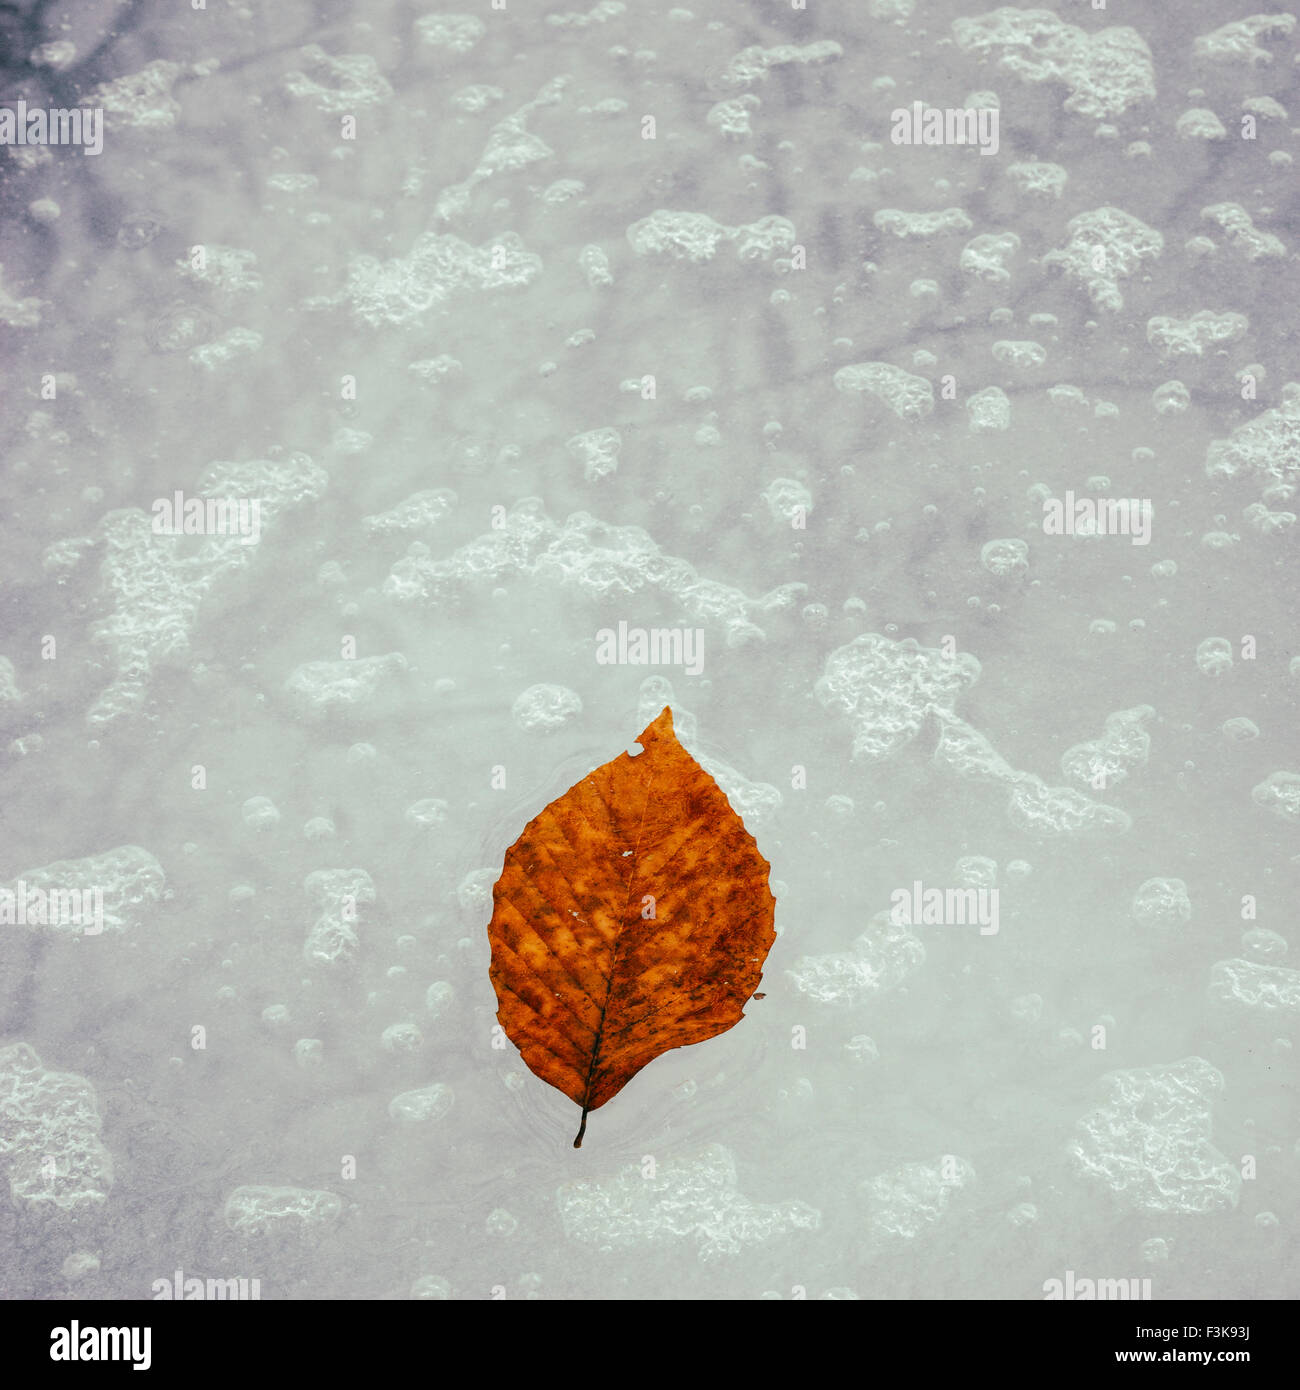 An autumn leaf frozen in ice. Stock Photo